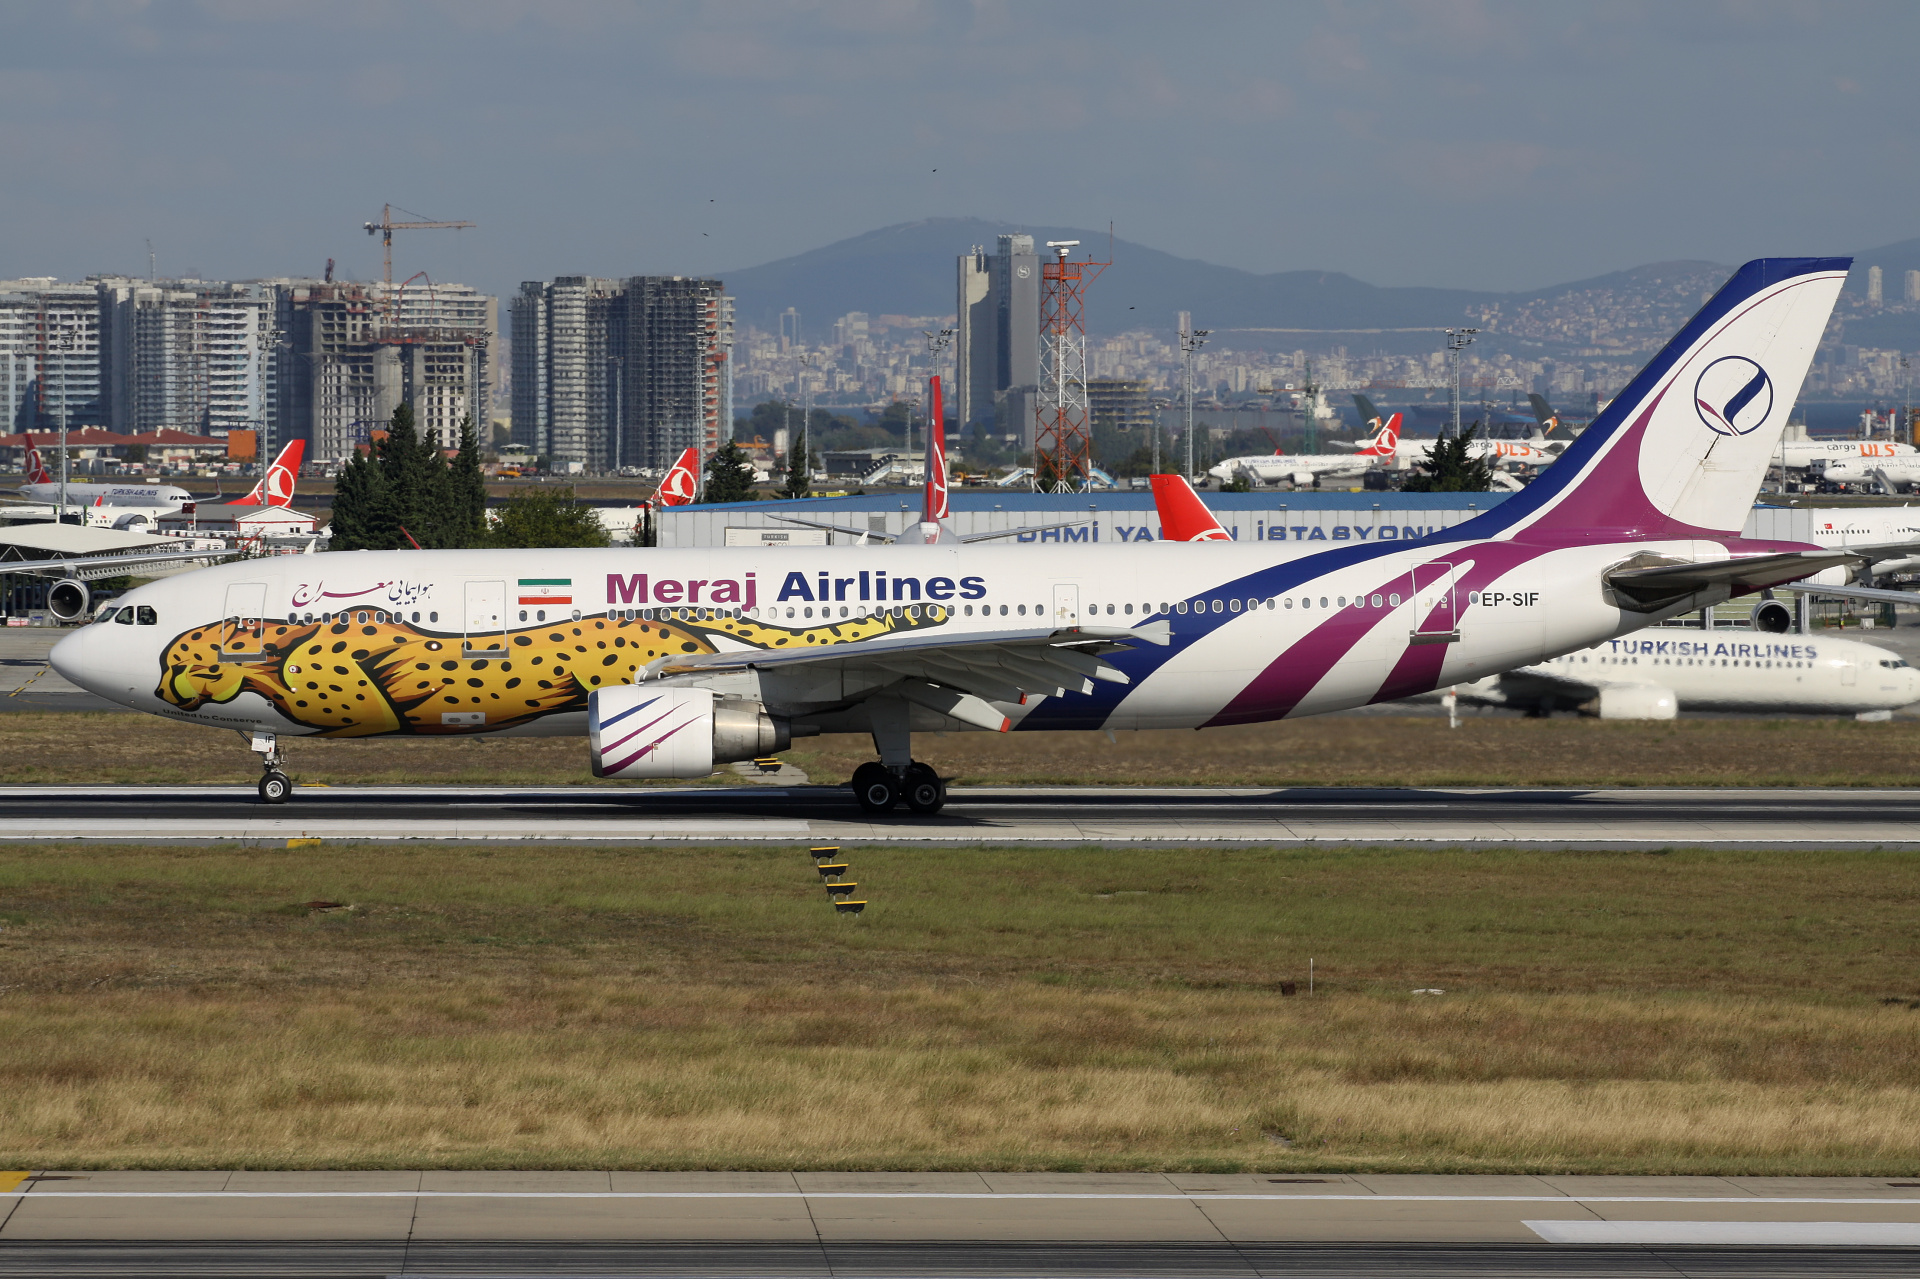 EP-SIF, Meraj Airlines (malowanie United to Conserve) (Samoloty » Port Lotniczy im. Atatürka w Stambule » Airbus A300B4-600R)